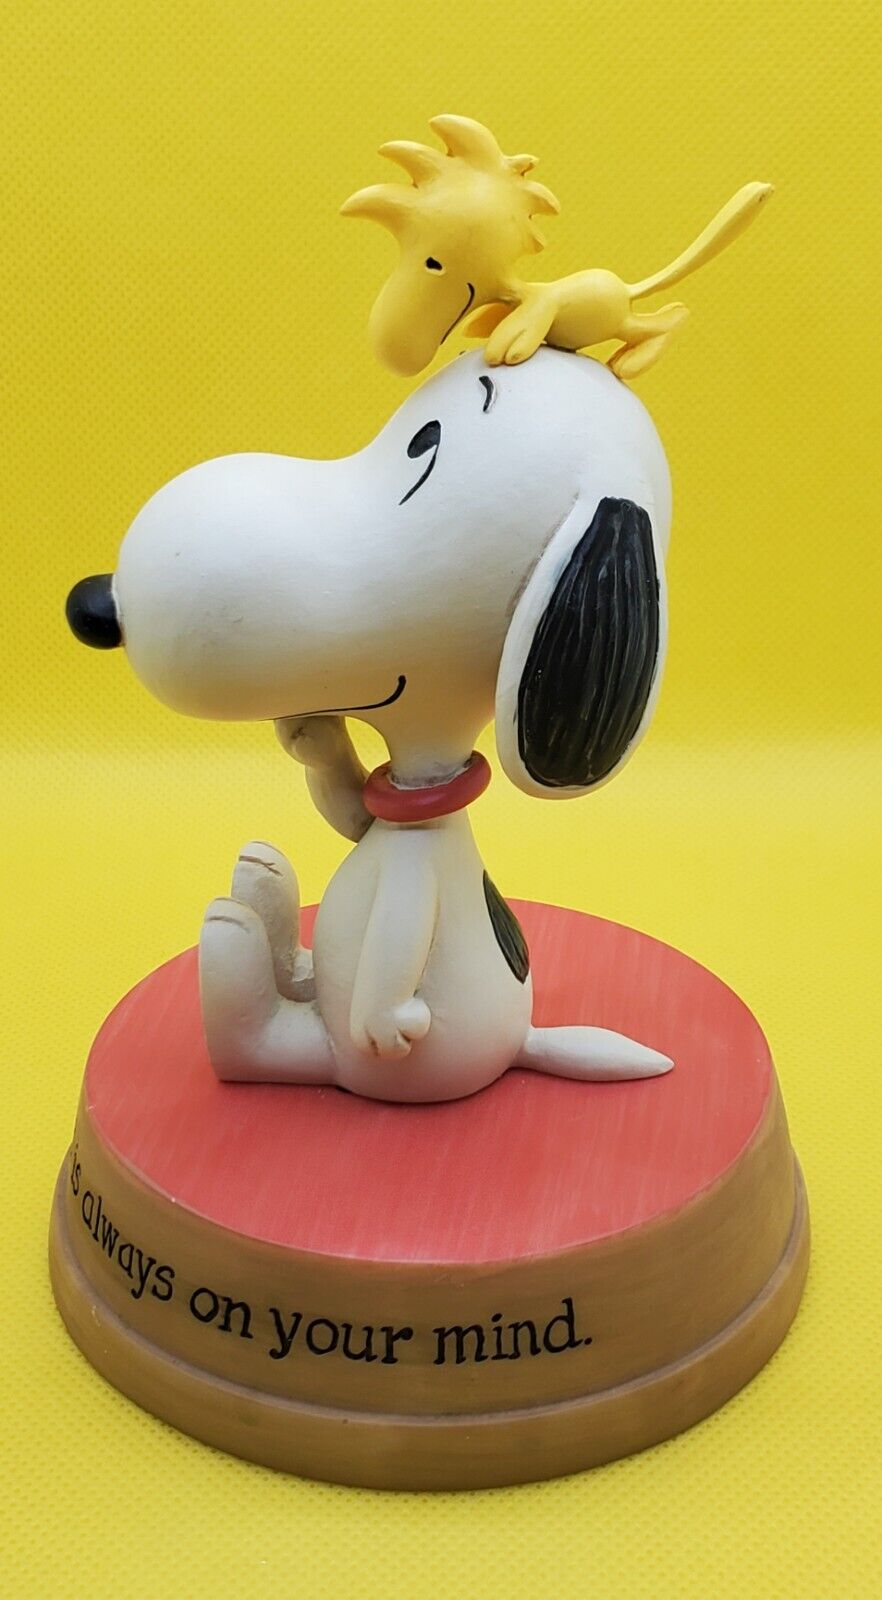 2014 Hallmark Snoopy Figurine Peanuts Gallery Friendship with Box 